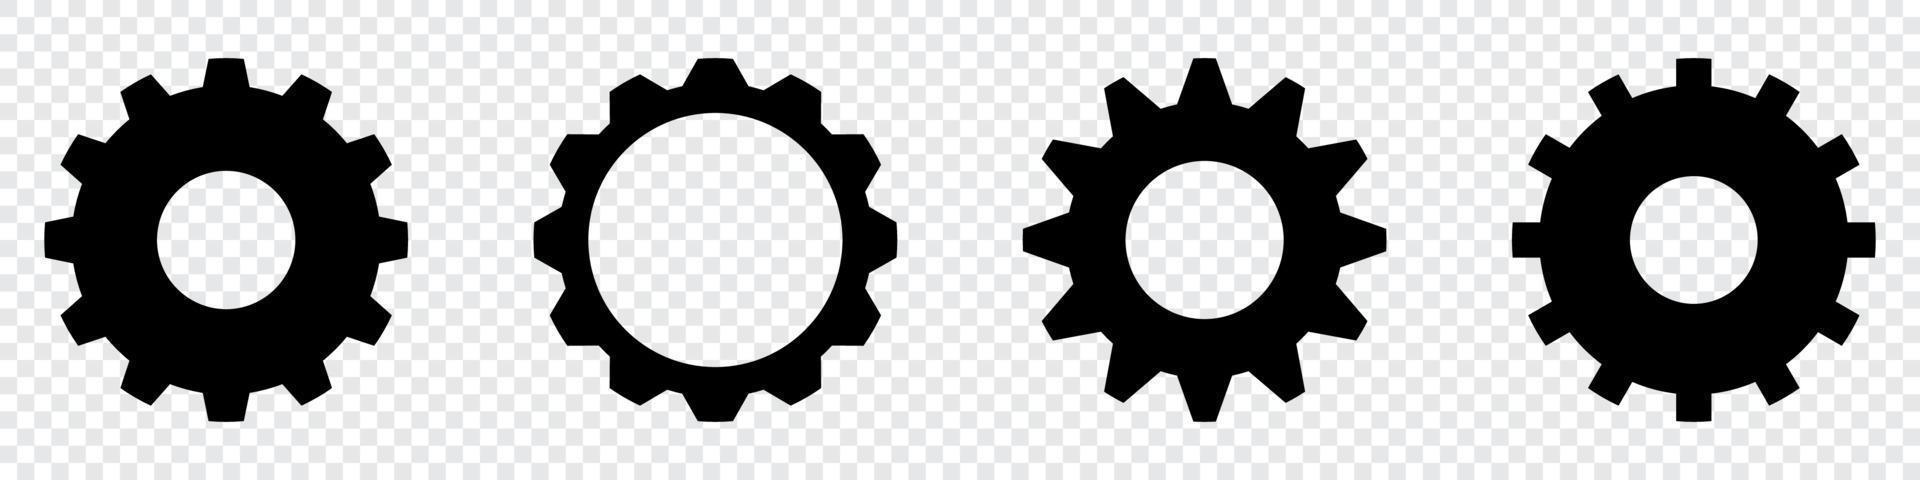 Gear set. Black gear wheel icons. Gear setting vector icon set